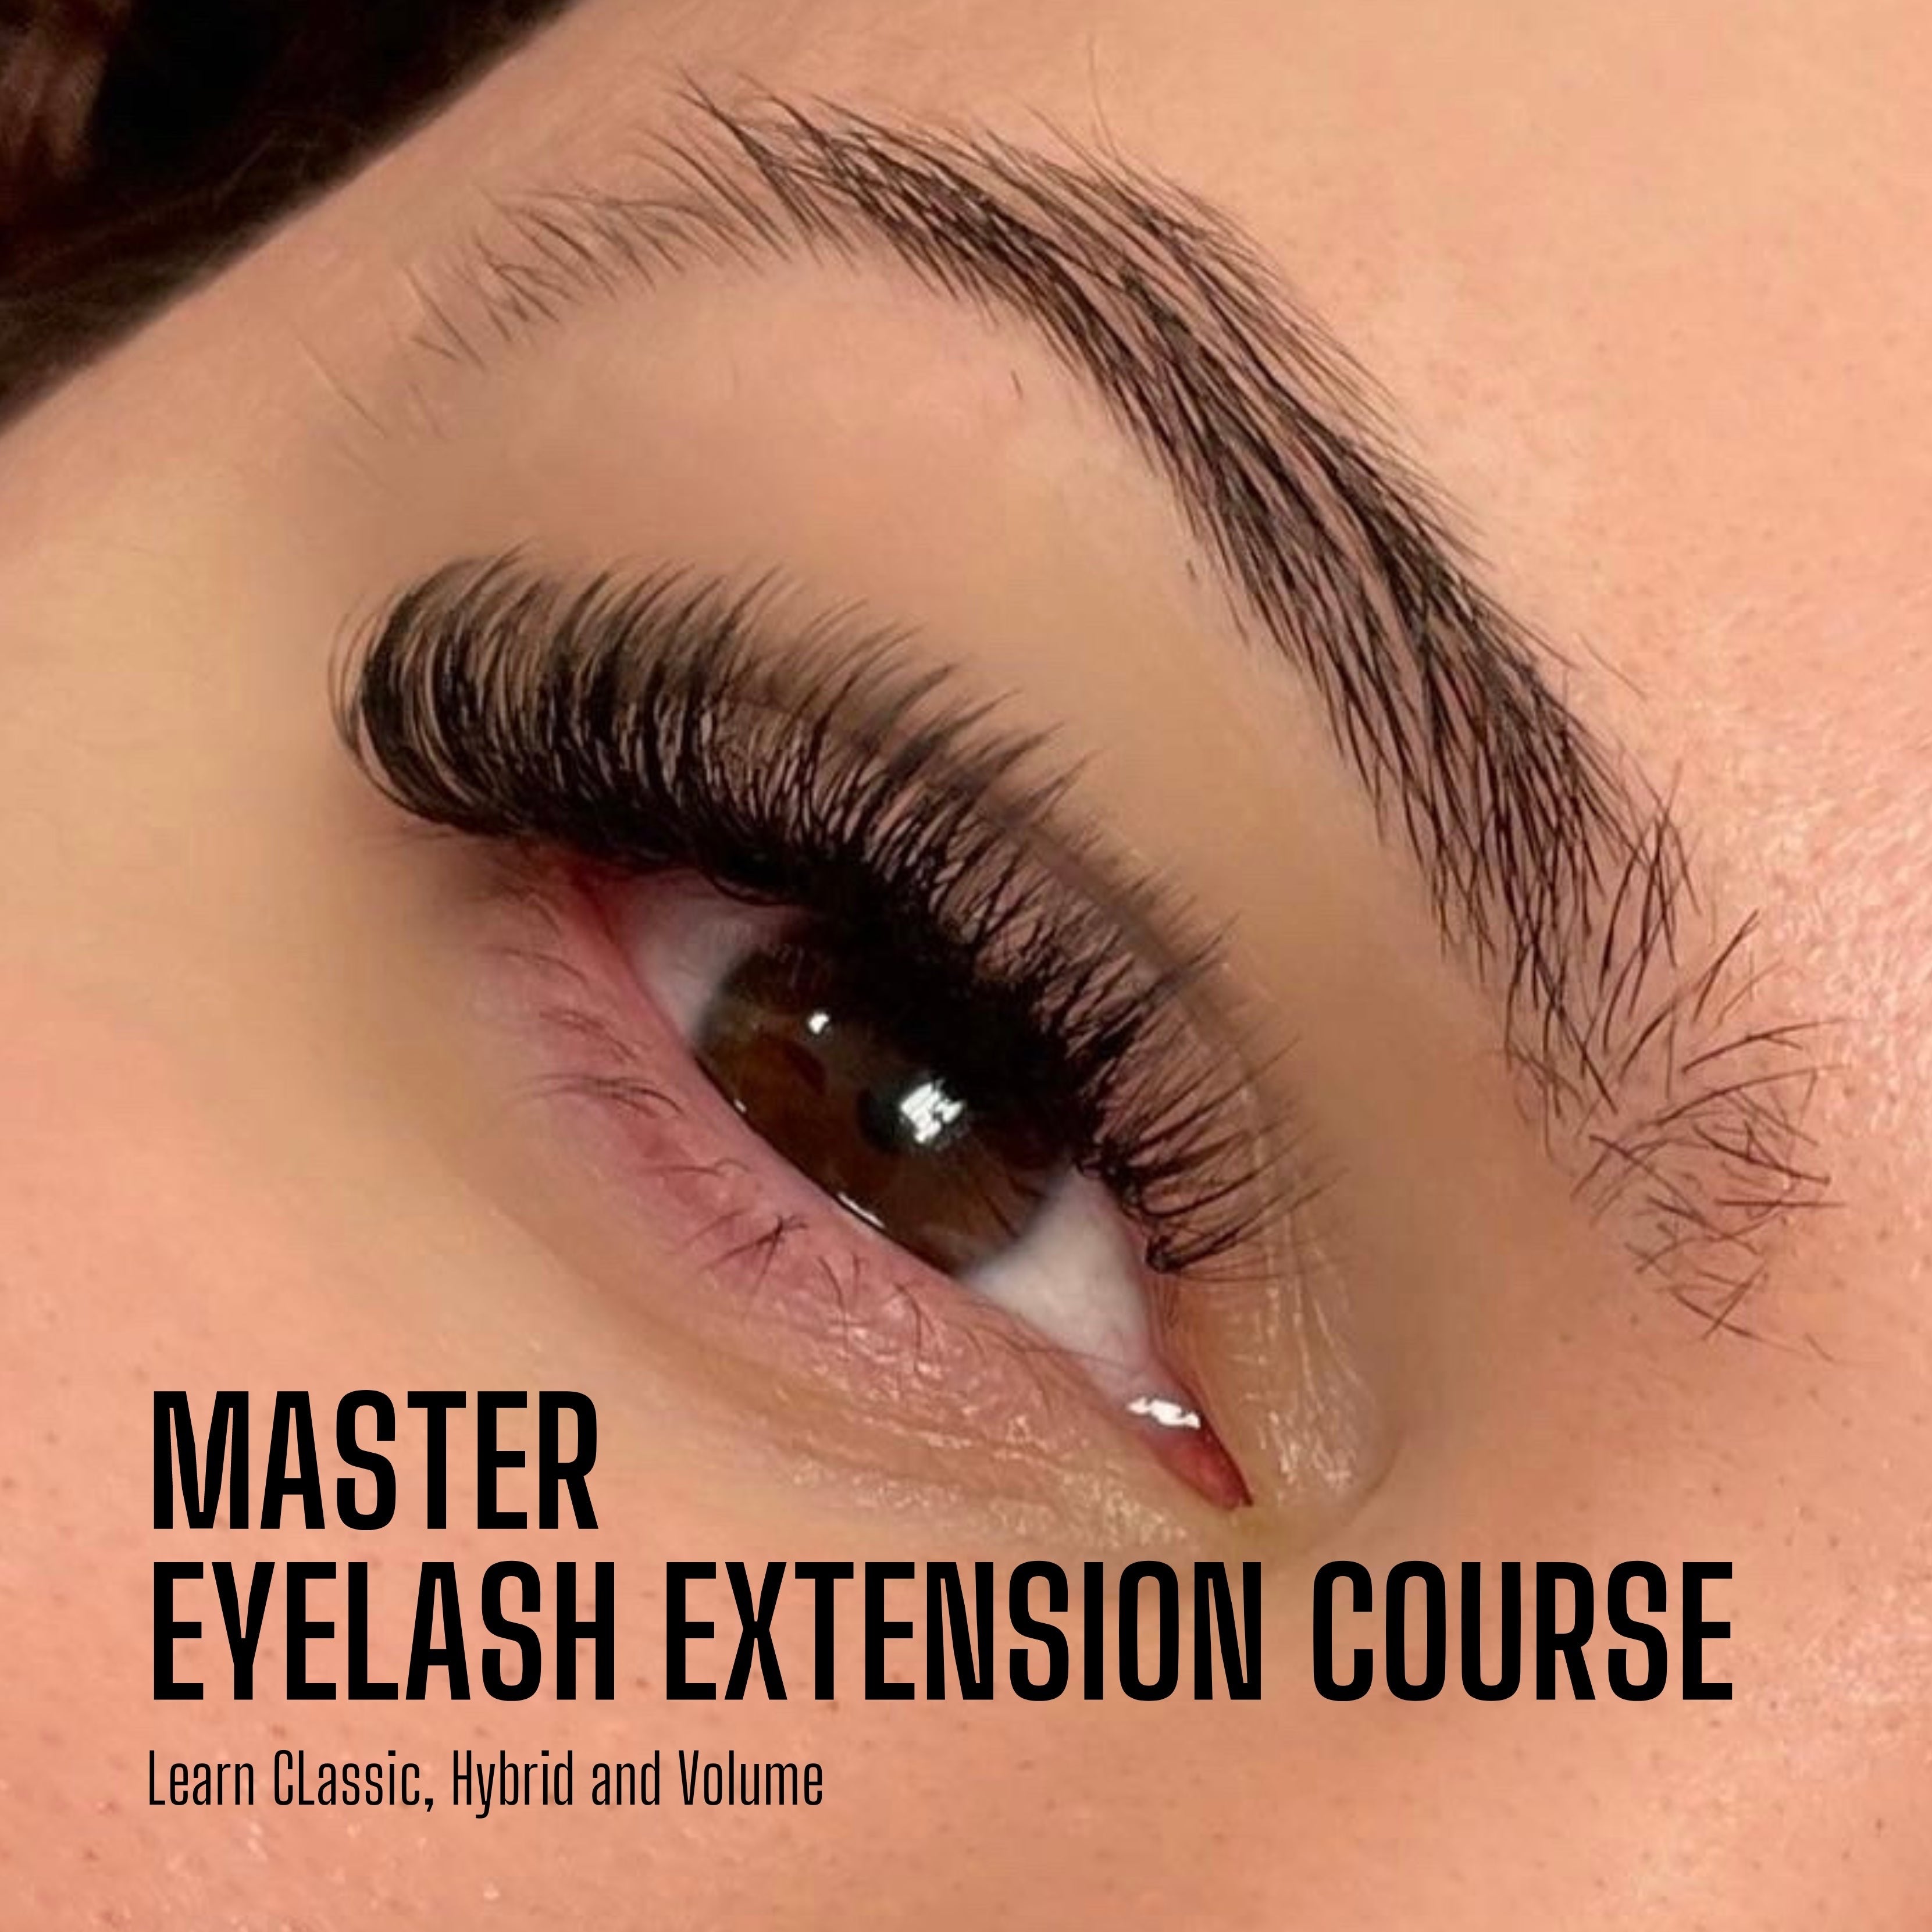 Master Eyelash Extension Course - With Starter Kit